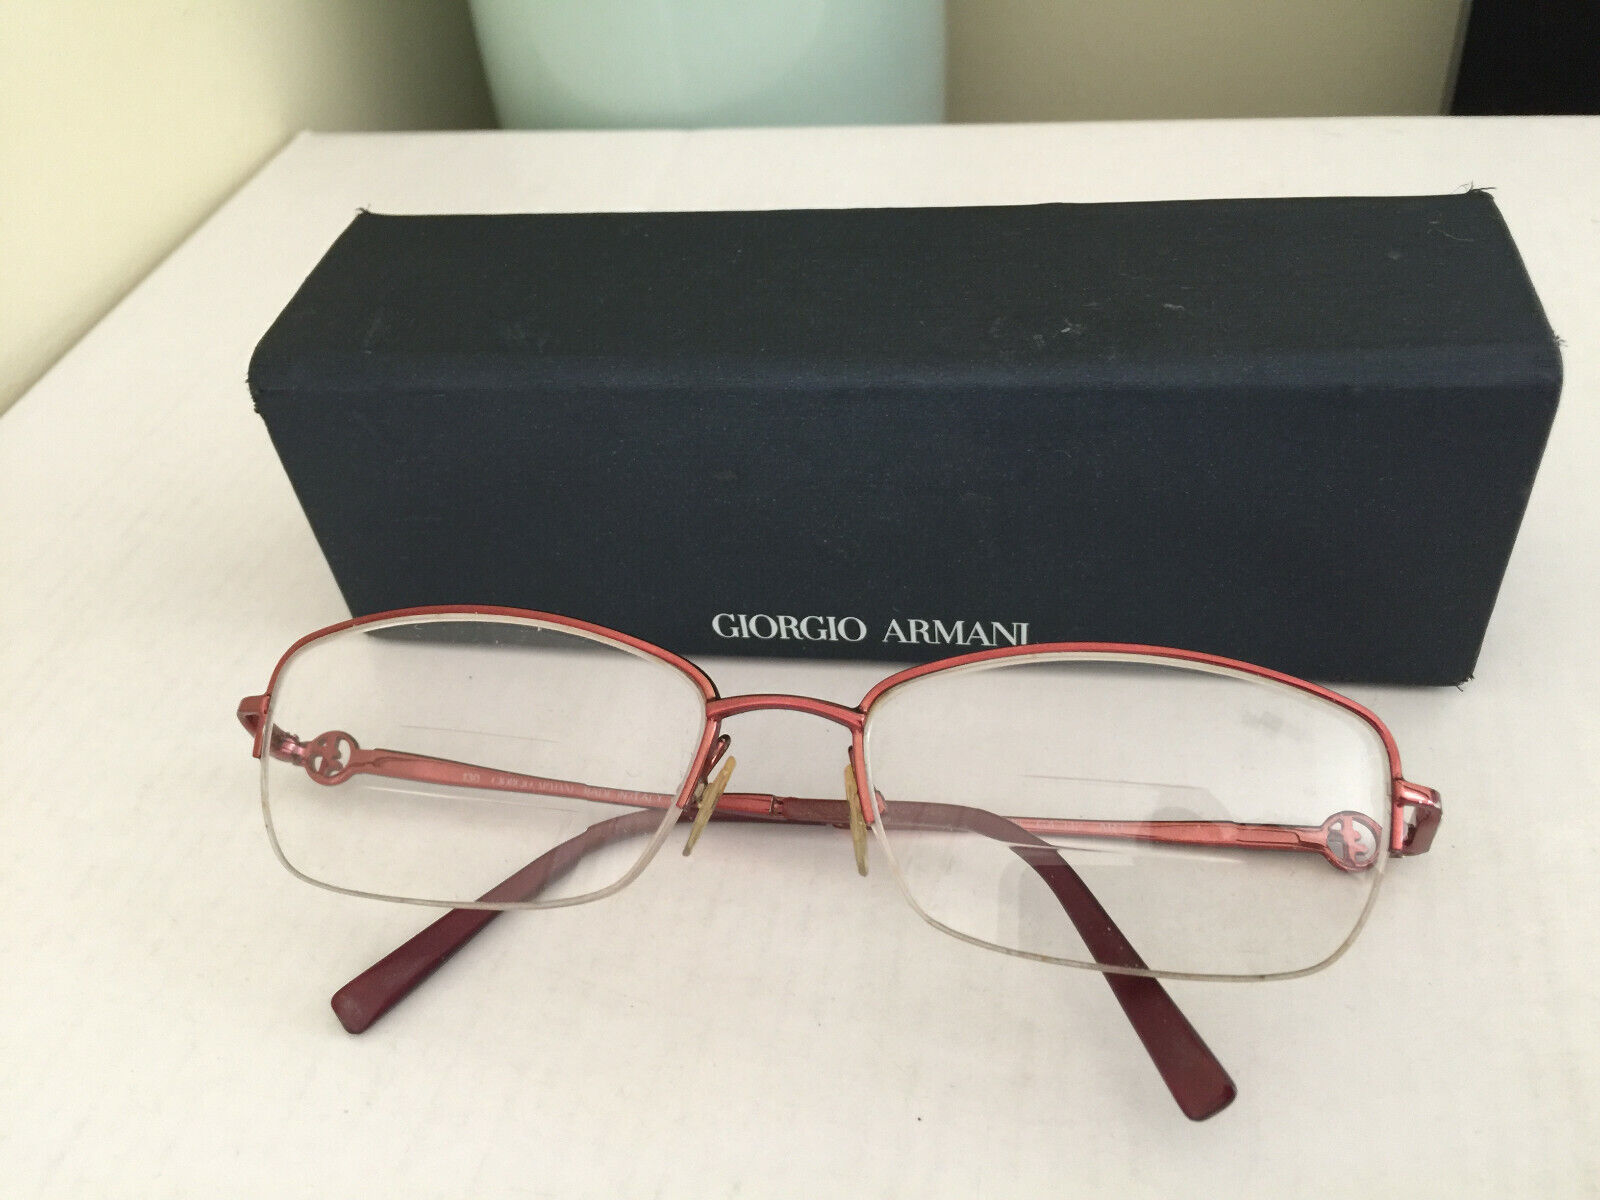 Giorgio Armani Eyeglasses Frame rose gold metal half rim w/case made in Italy